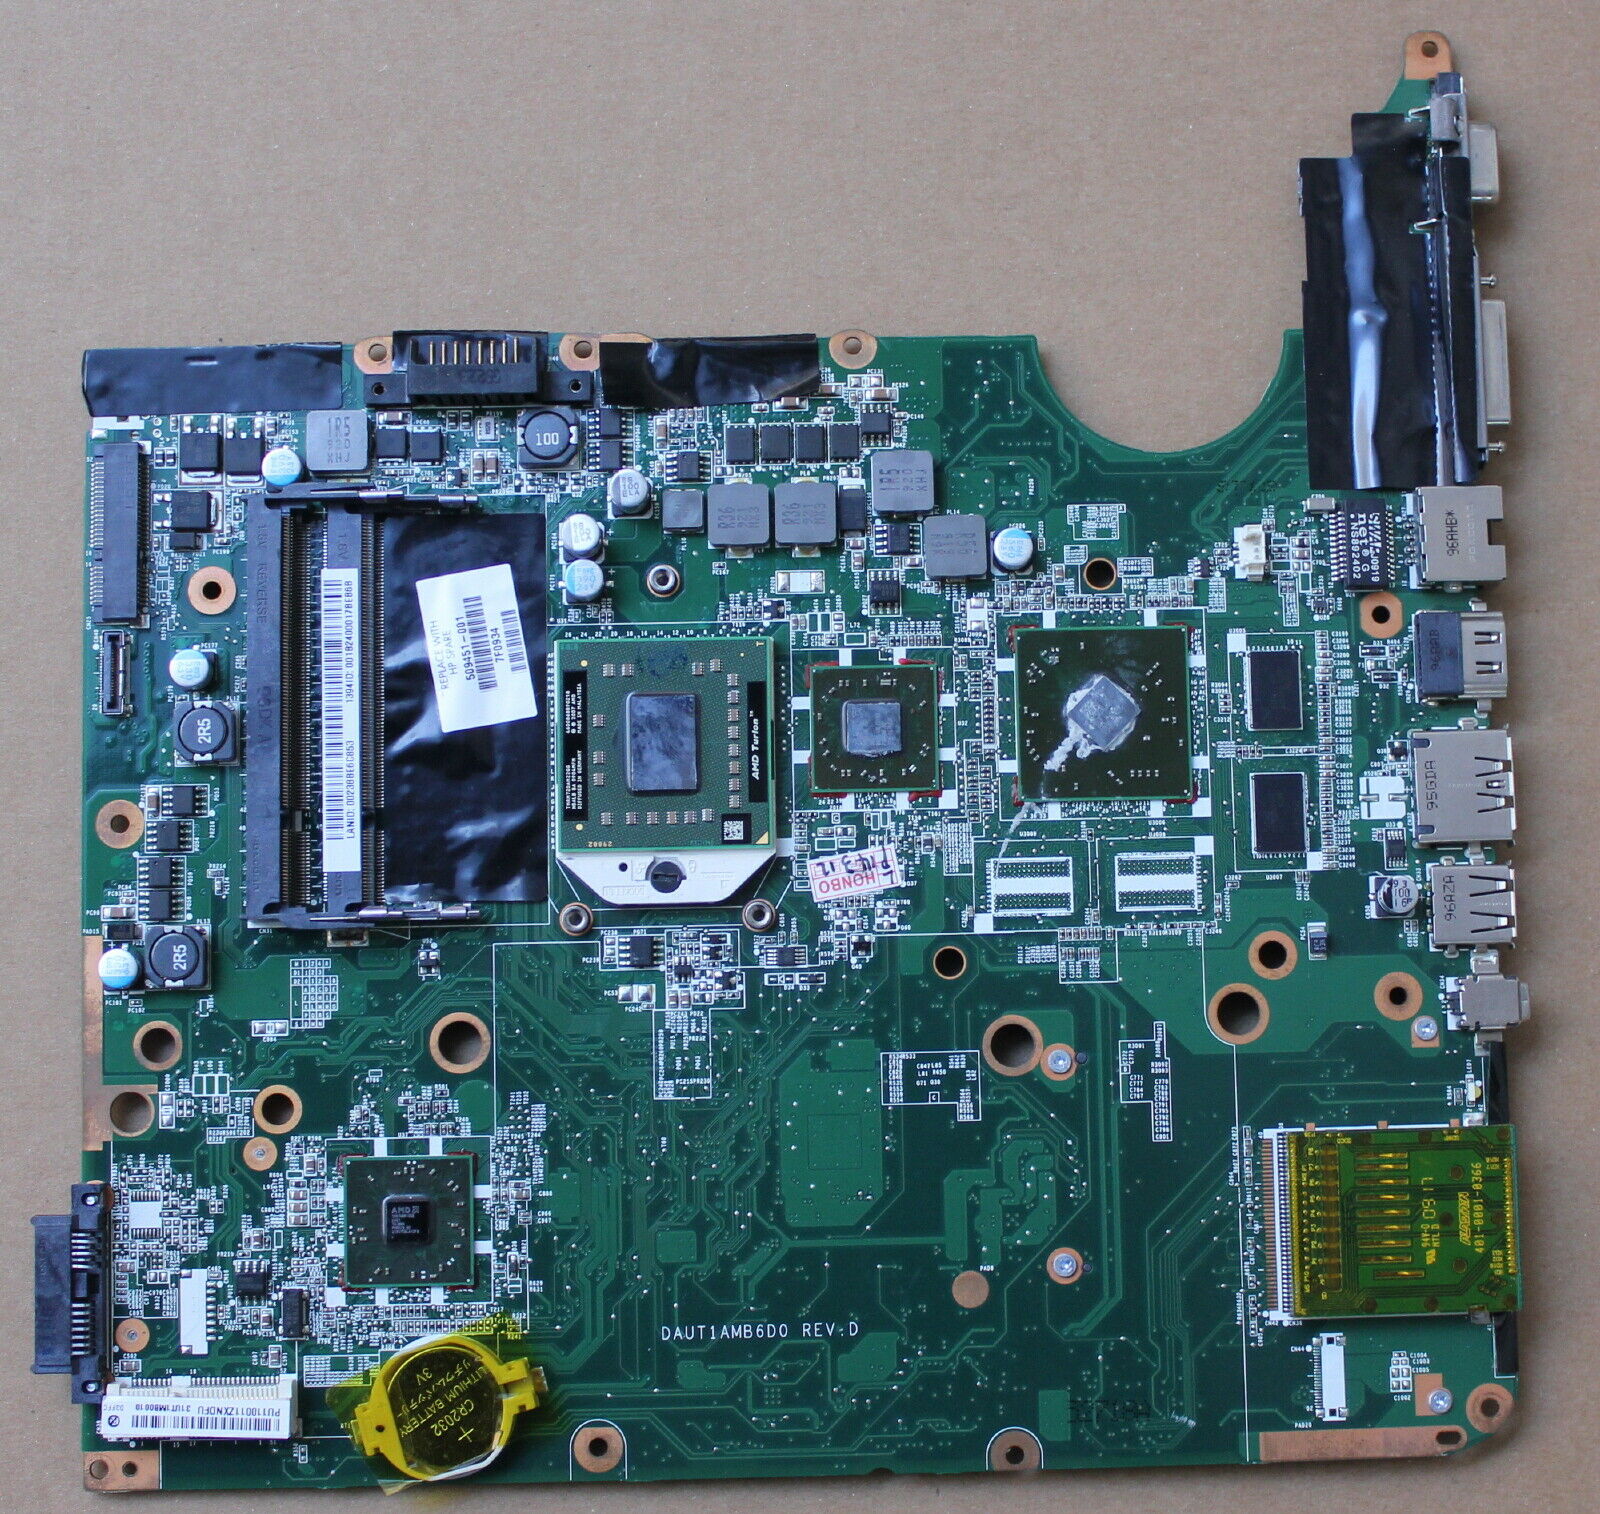 Board, motherboard, HP pavilion dv6 DAUT 1amb6d0, 509451-001, AMD HP Pavilion , DV6 Series Motherboard Vers